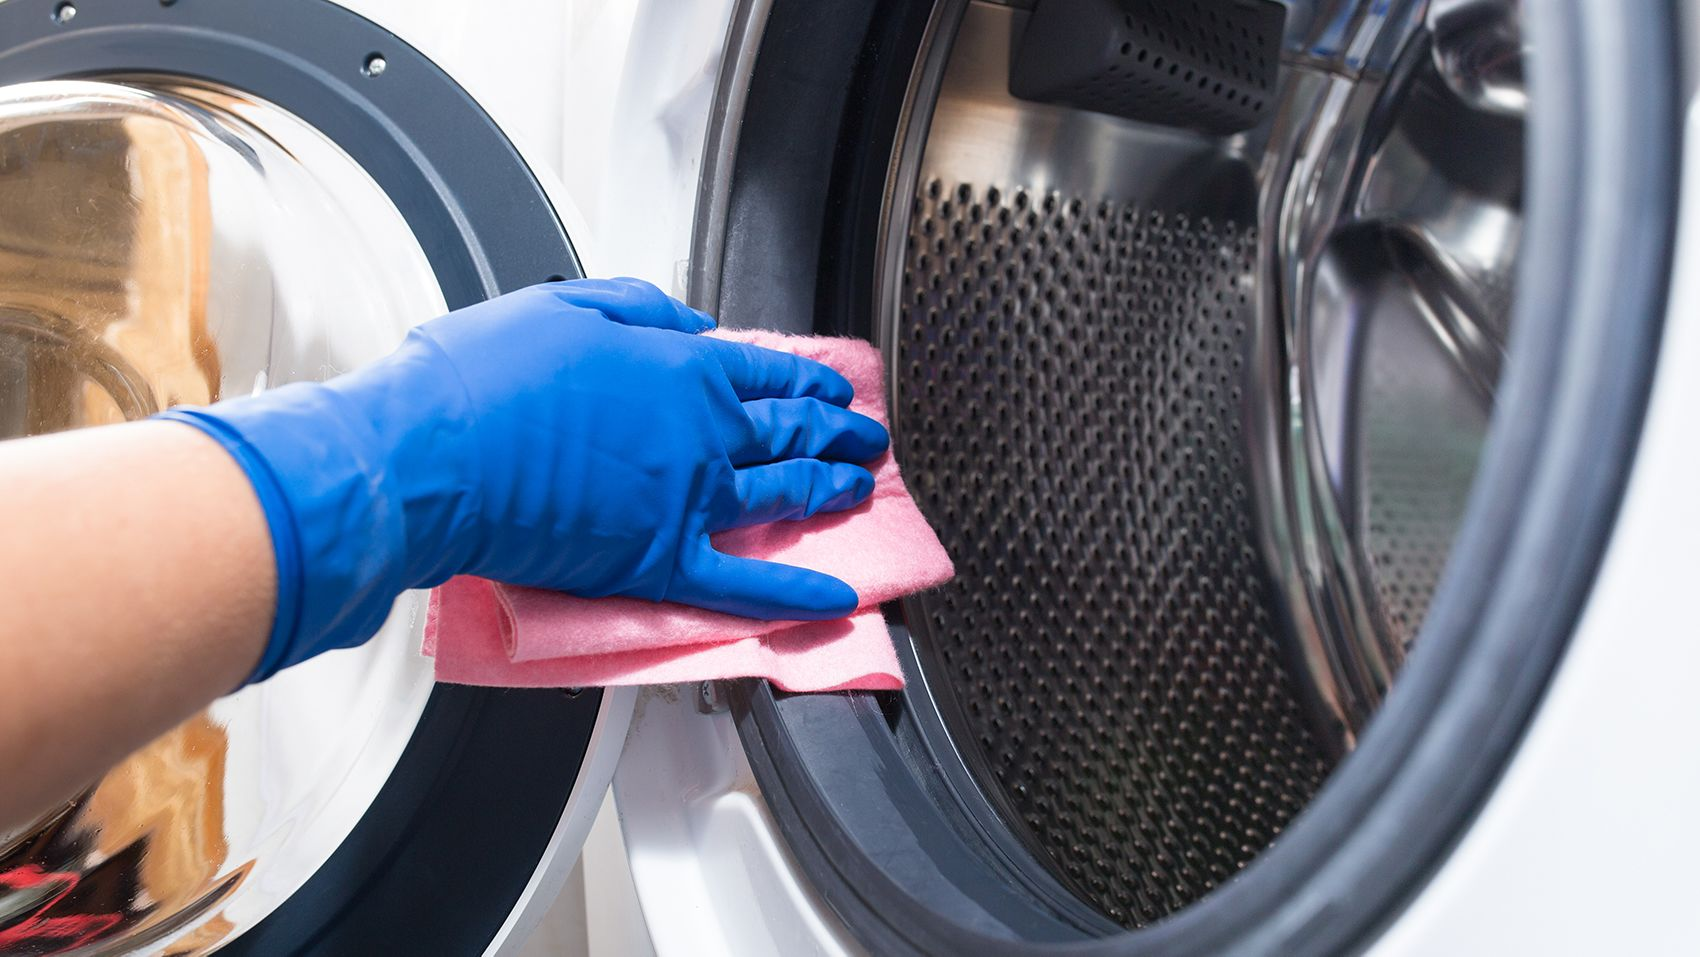 Why you should clean your washing machine?